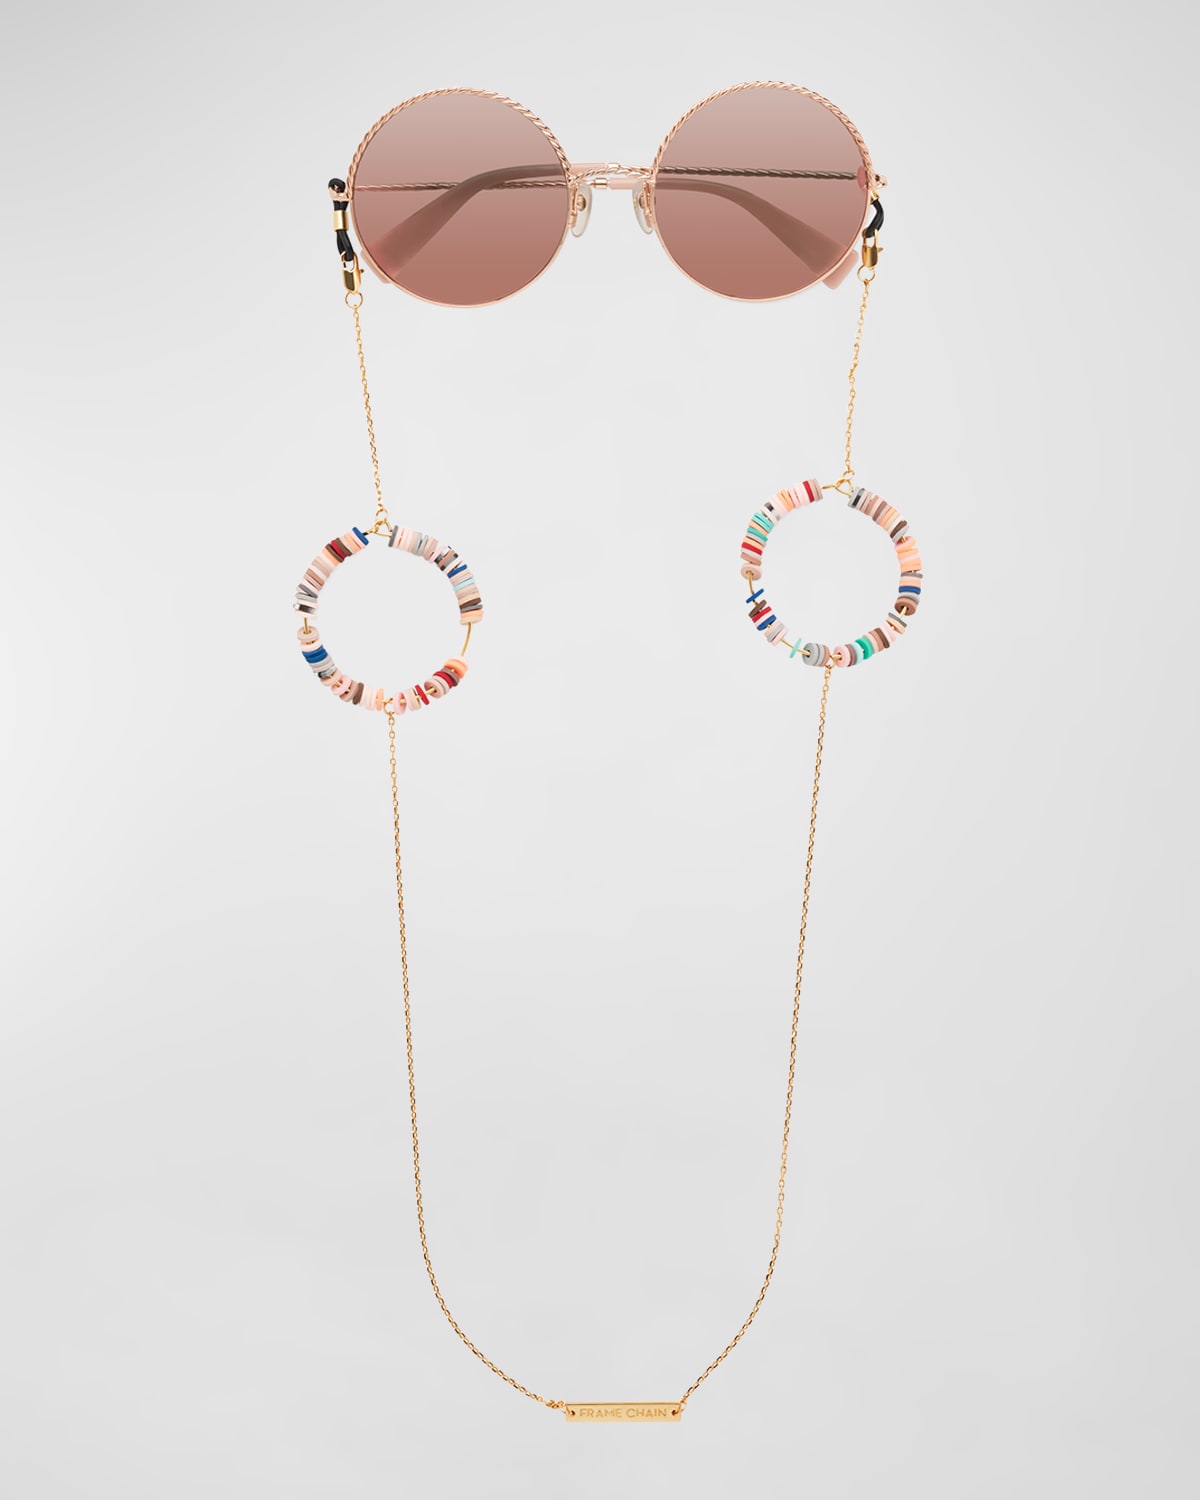 FRAME CHAIN Ring Beaded Sunglasses Chain Strap